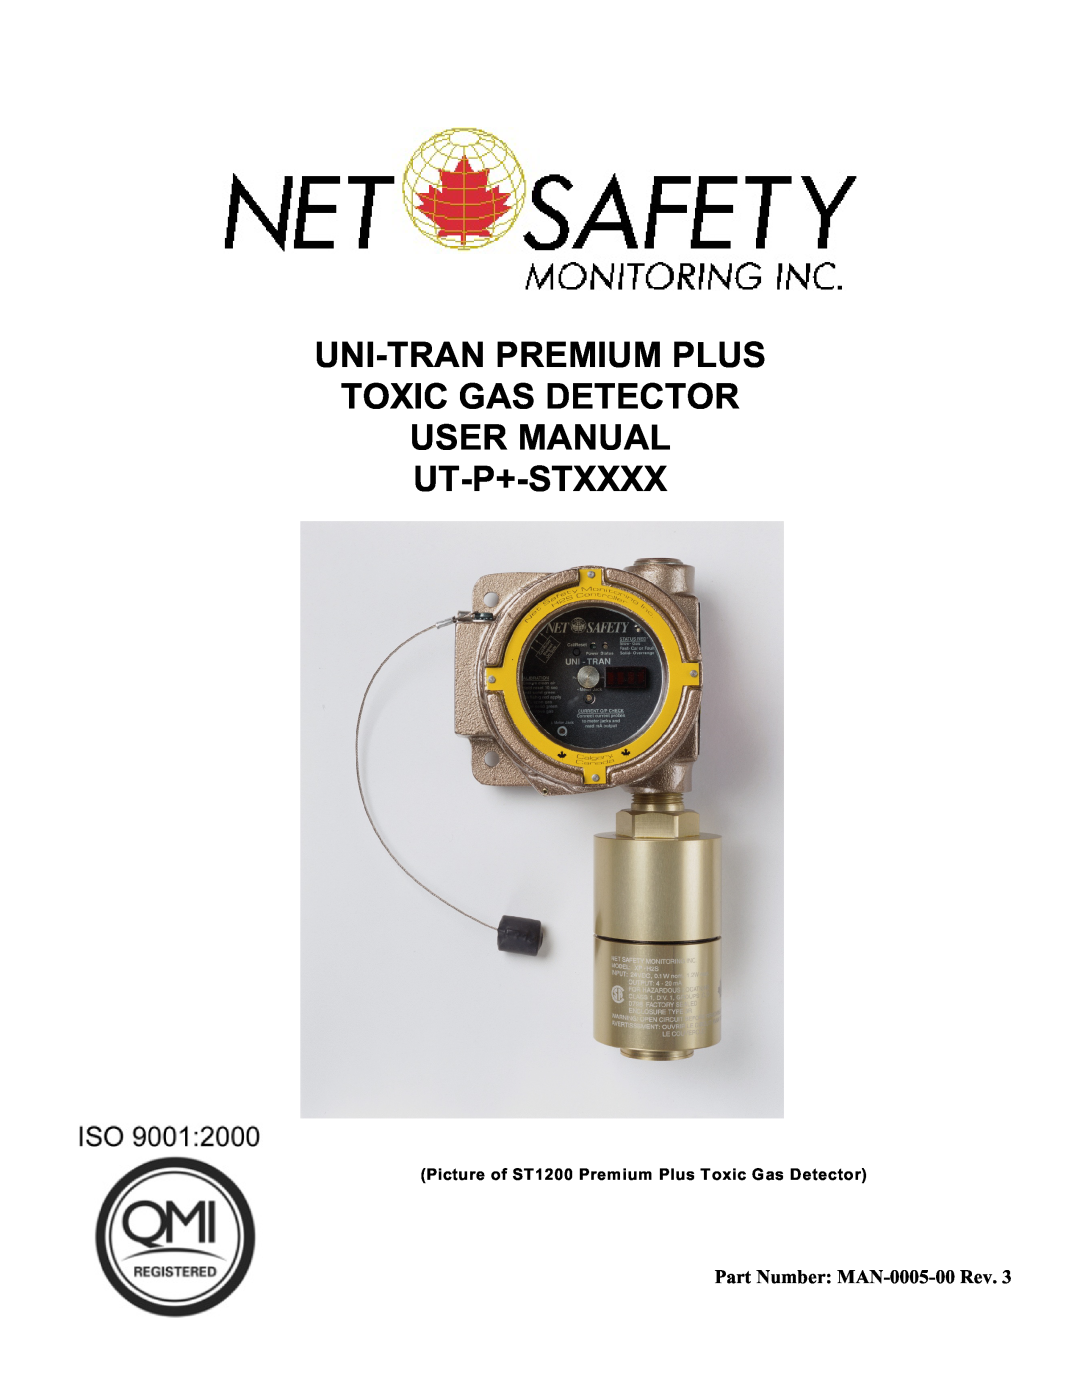 Emerson MA N-00 05-00, UT-P+-STXXXX user manual Uni-Tranpremium Plus Toxic Gas Detector, Part Number MAN-0005-00Rev 